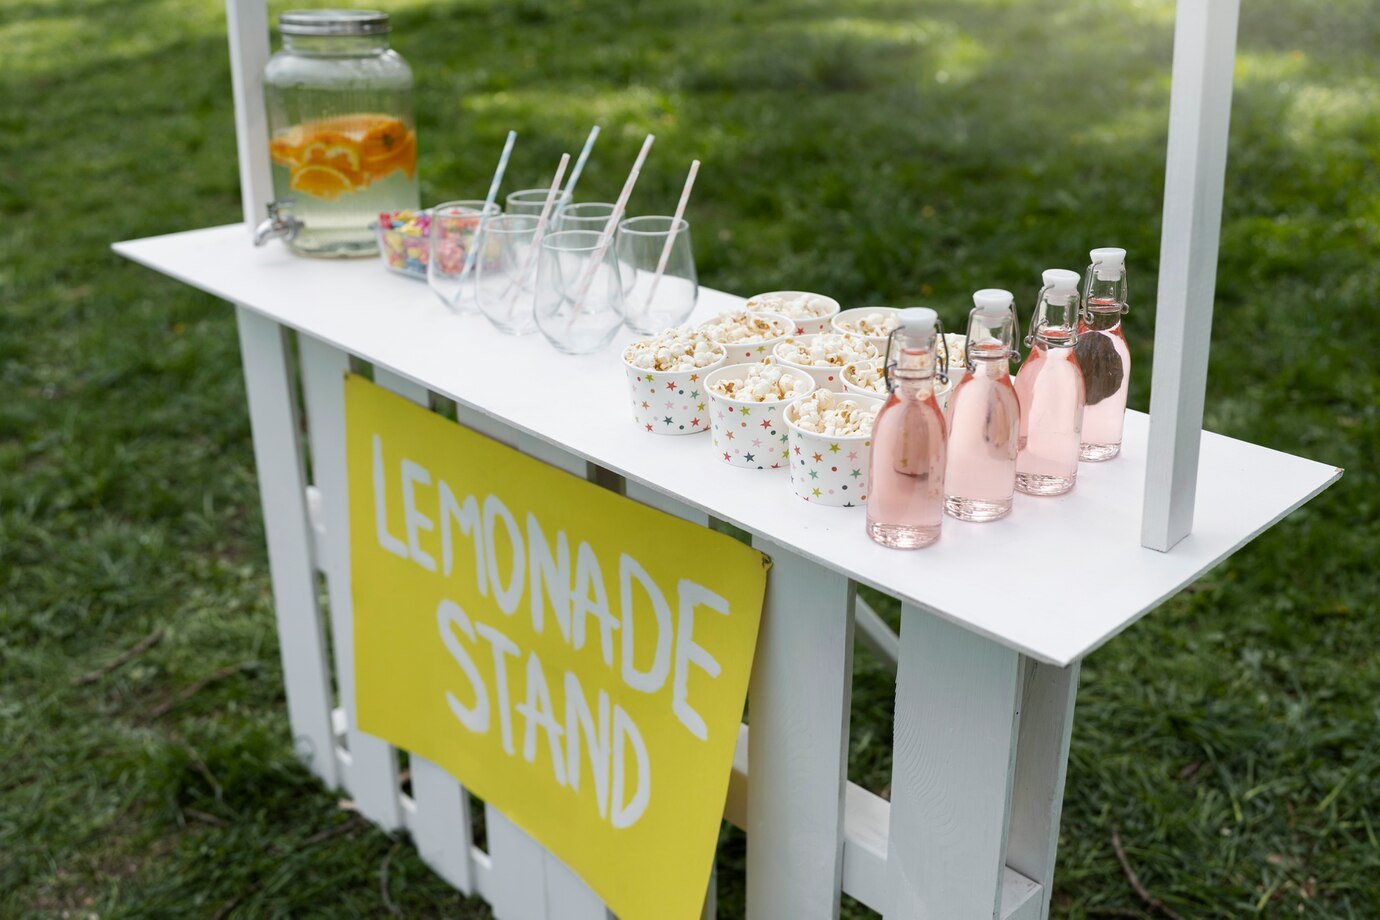 Lemonade Stand Ideas